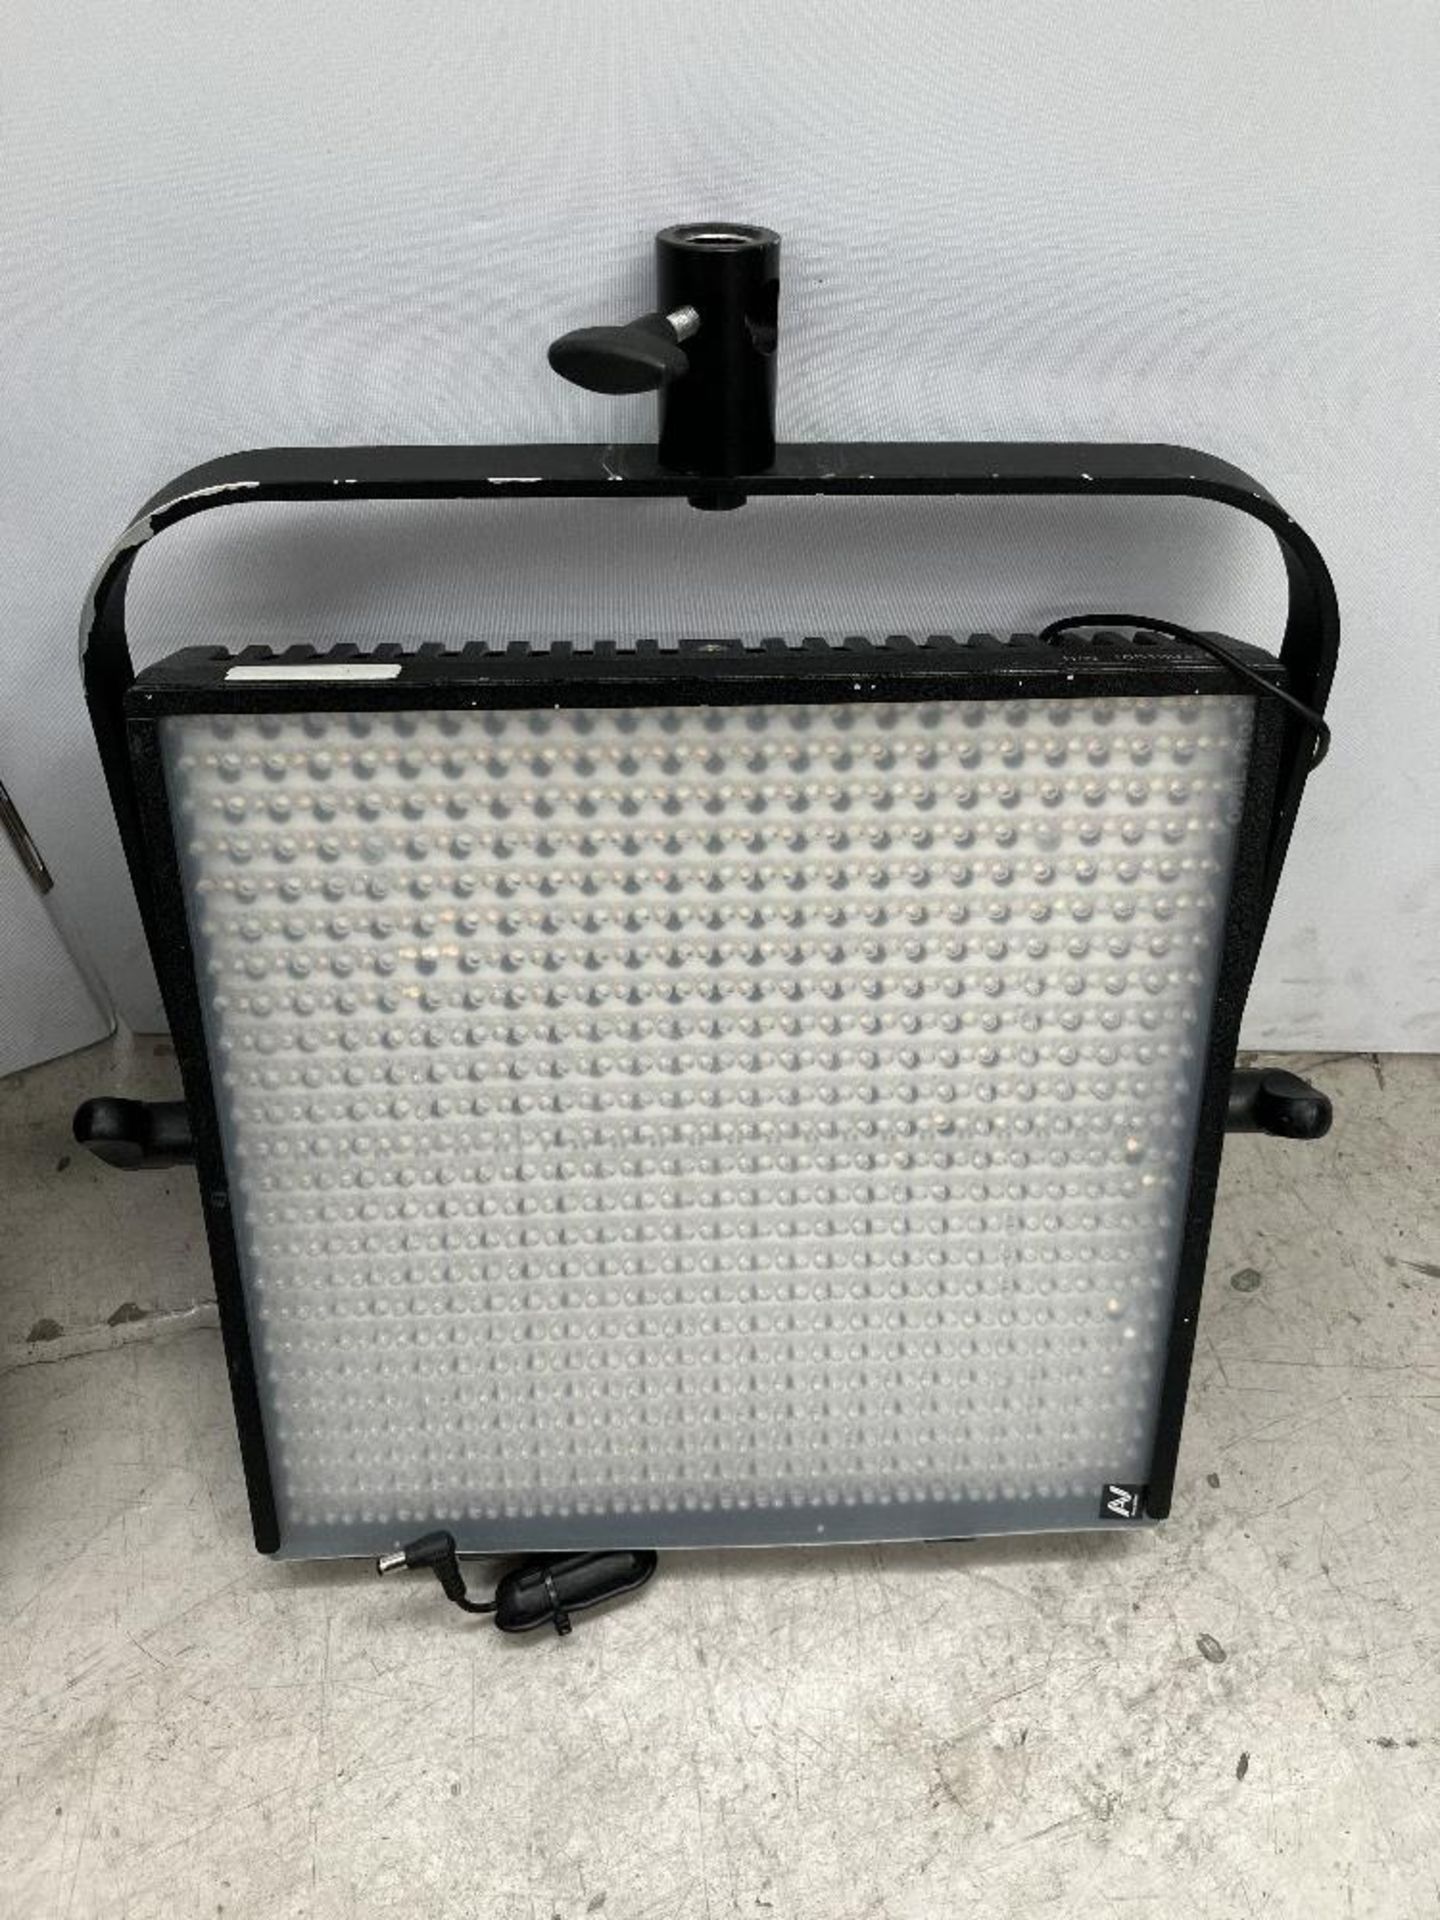 Litepanels 1X1 LED Panel Light kit - Image 4 of 5